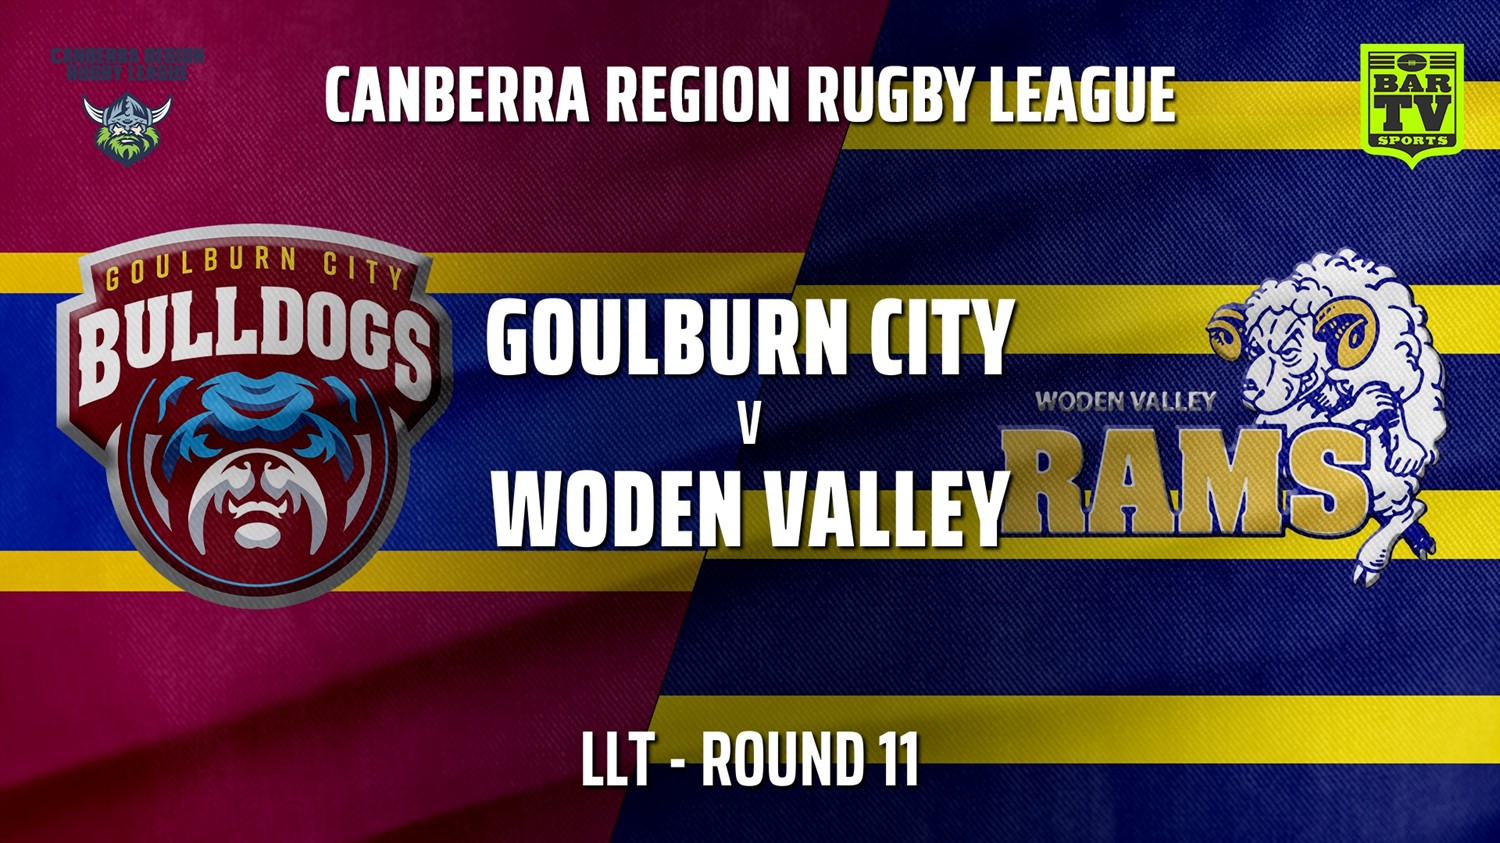 210710-Canberra Round 11 - LLT - Goulburn City Bulldogs v Woden Valley Rams Slate Image